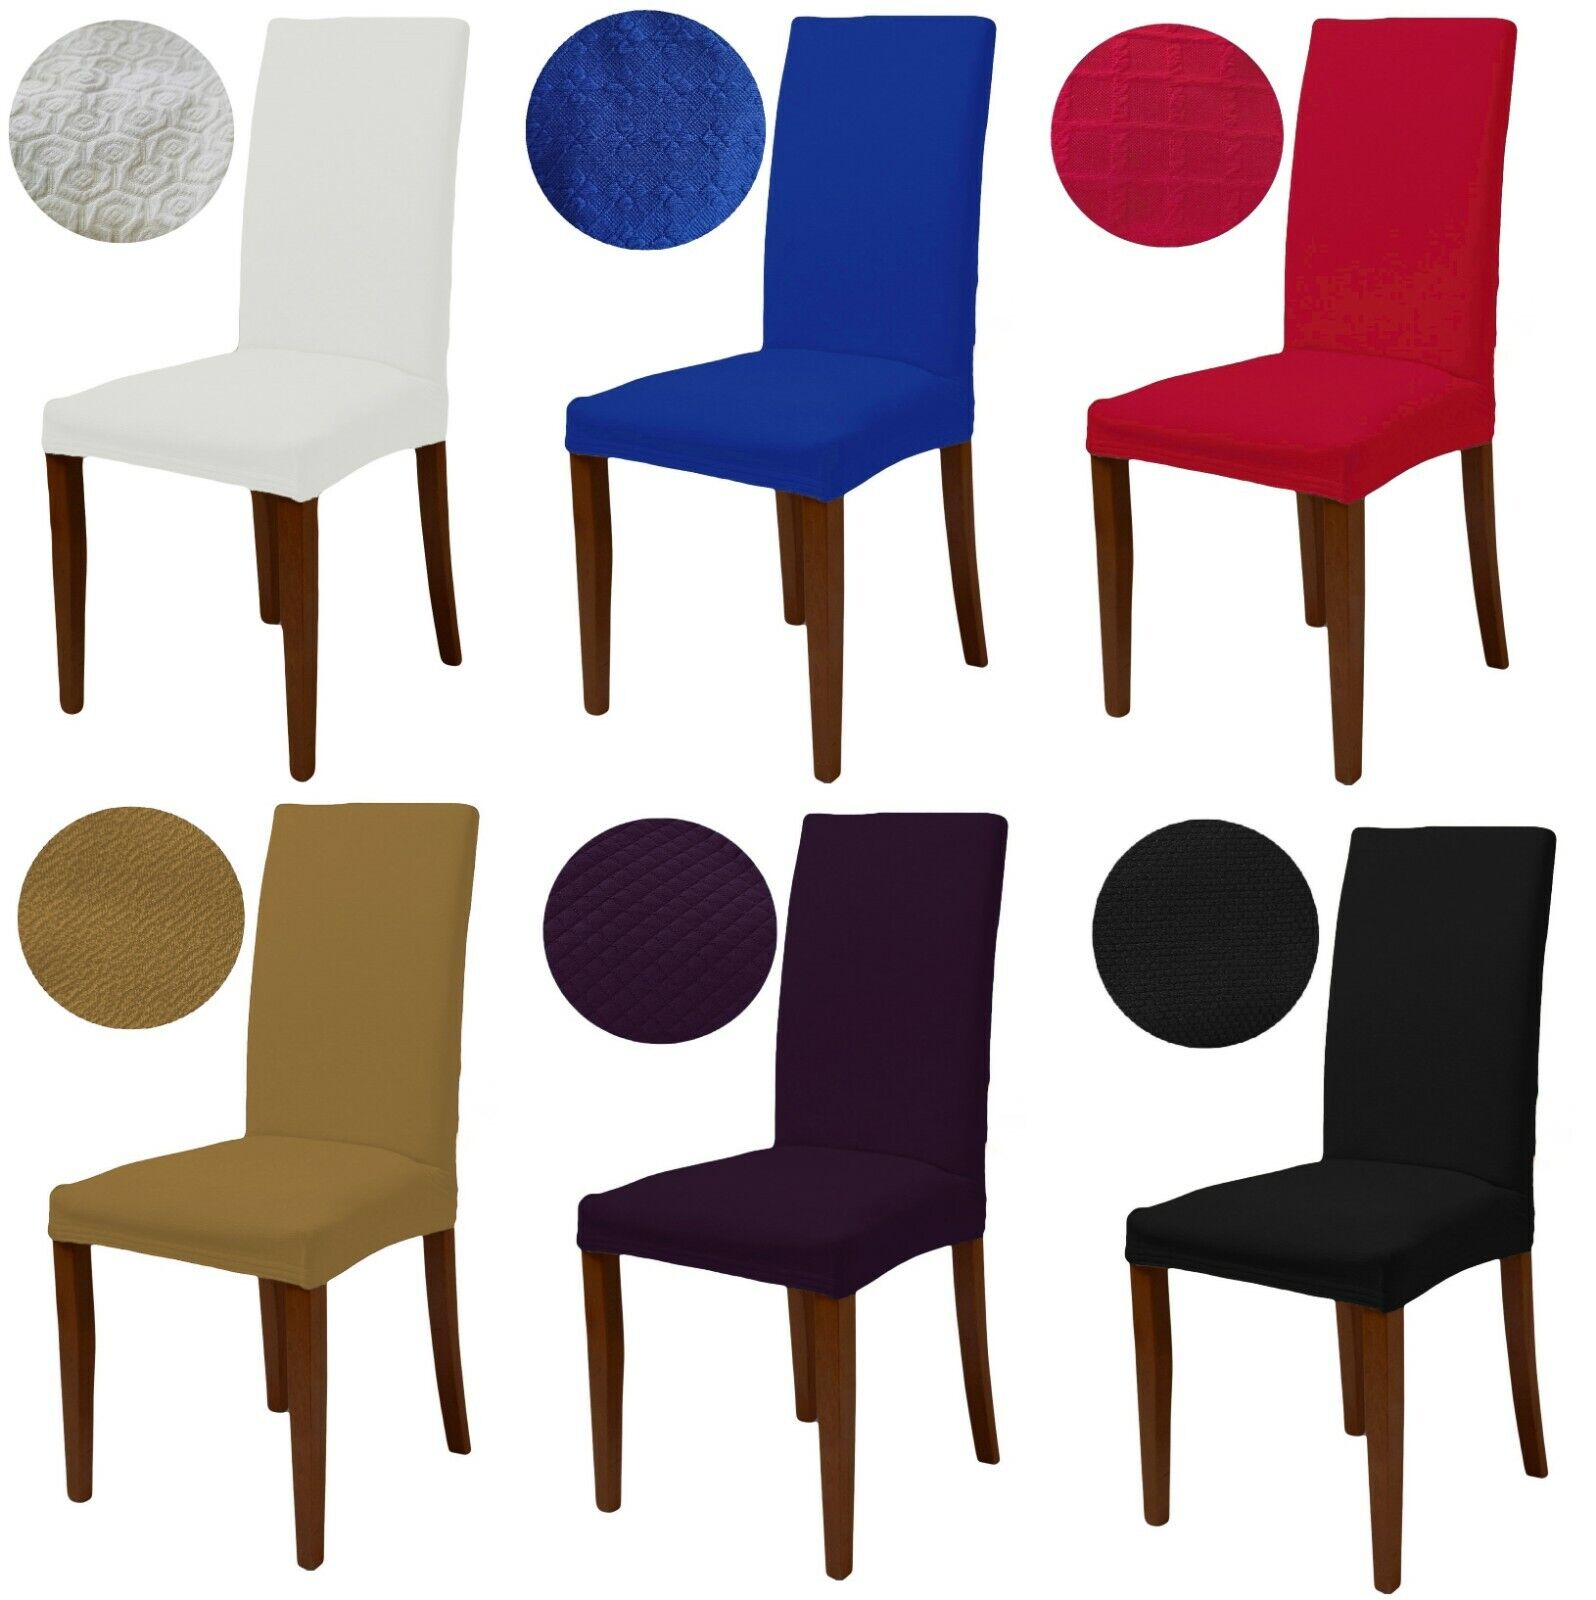 6 COPRISEDIA vesti sedia elasticizzato UNIVERSALE tinta unita + fantasie